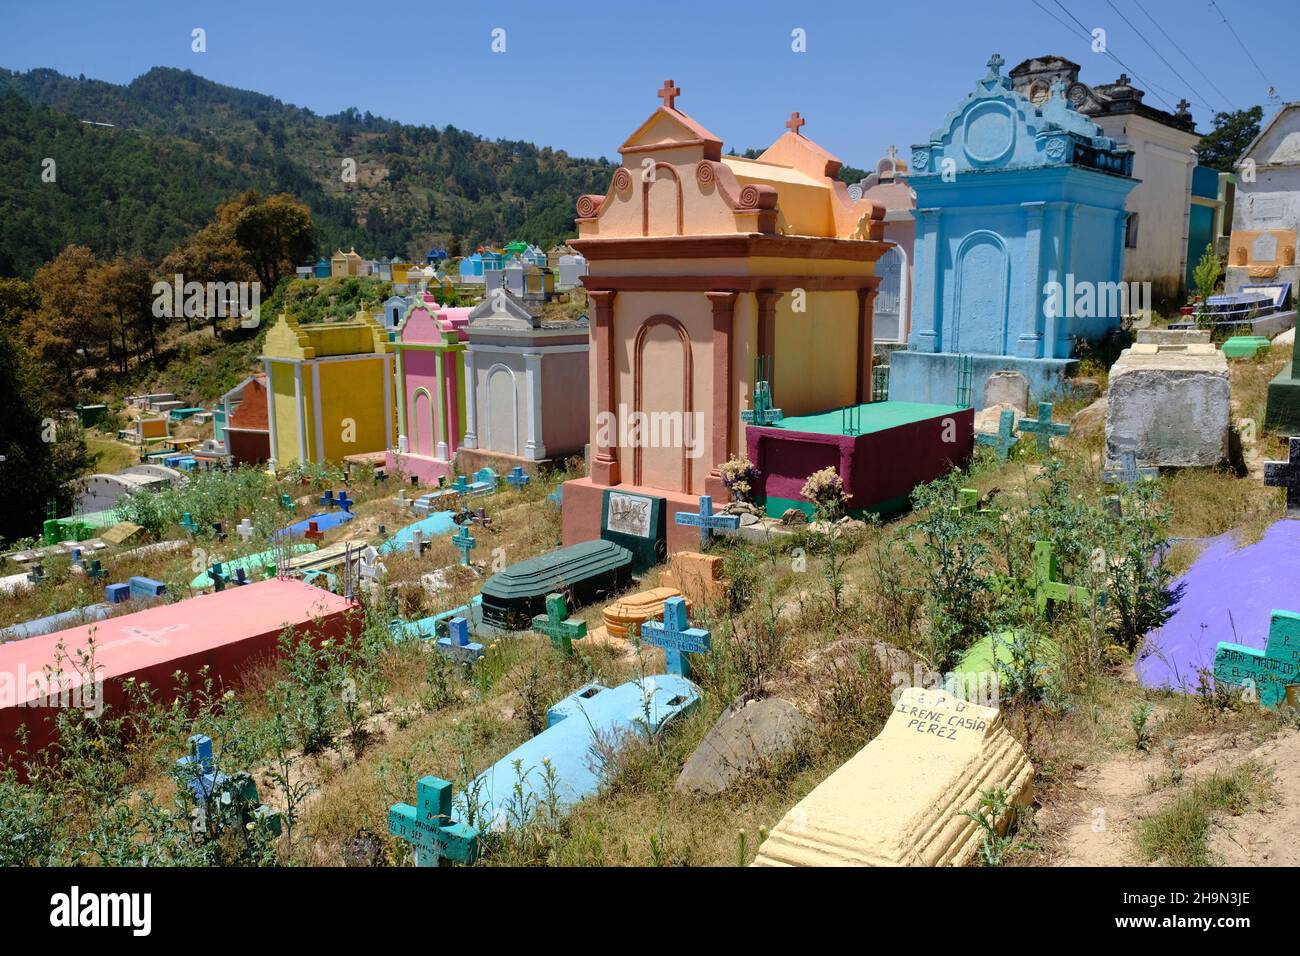 Guatemala Chichicastenango - Cementerio De Chichicastenango - Mayan traditional colorful Cemetery Stock Photo